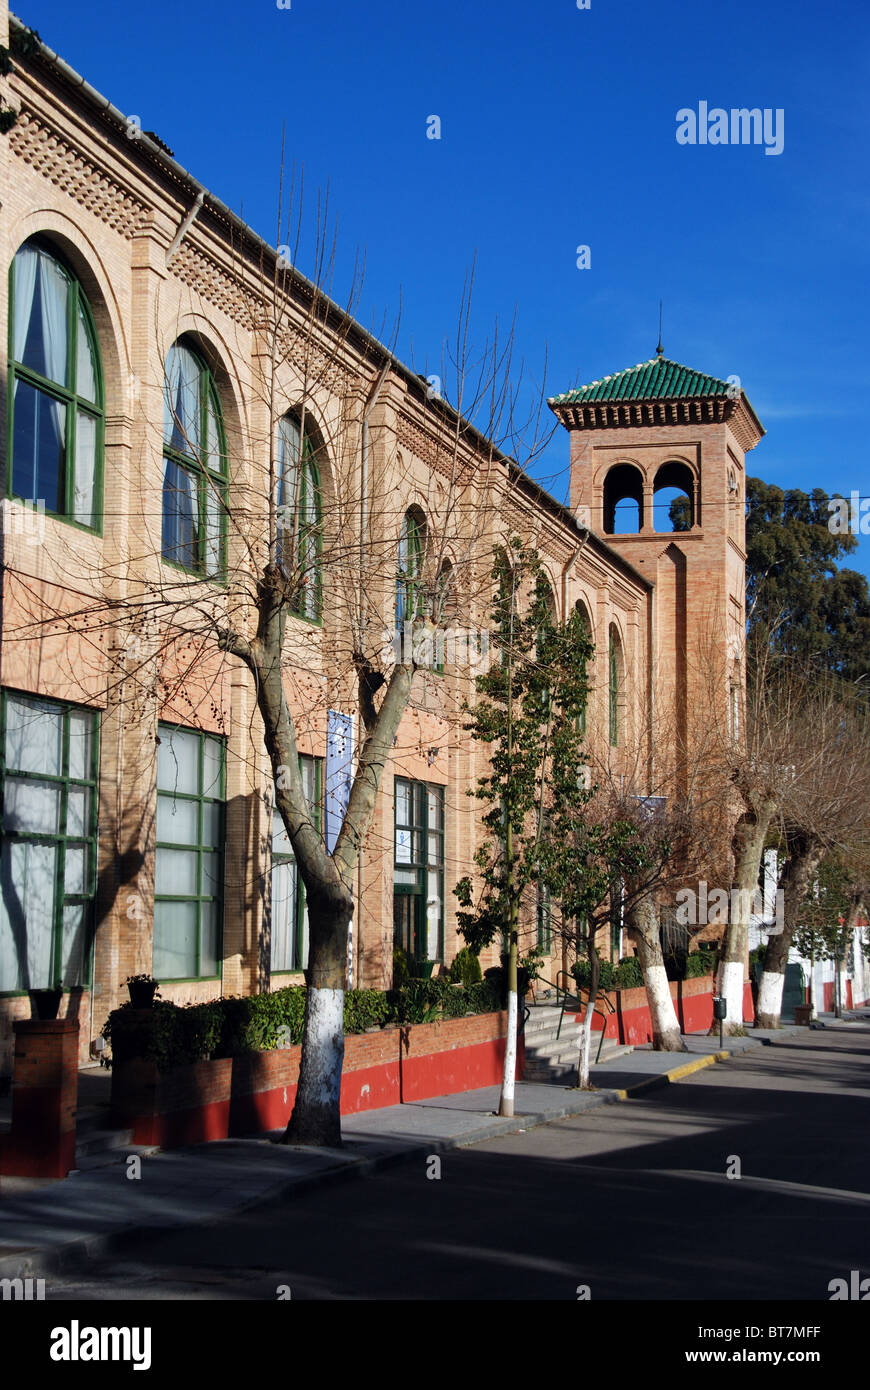 Public building with tower, Lanjaron, Las Alpujarras, Granada Province, Andalucia, Spain, Western Europe. Stock Photo